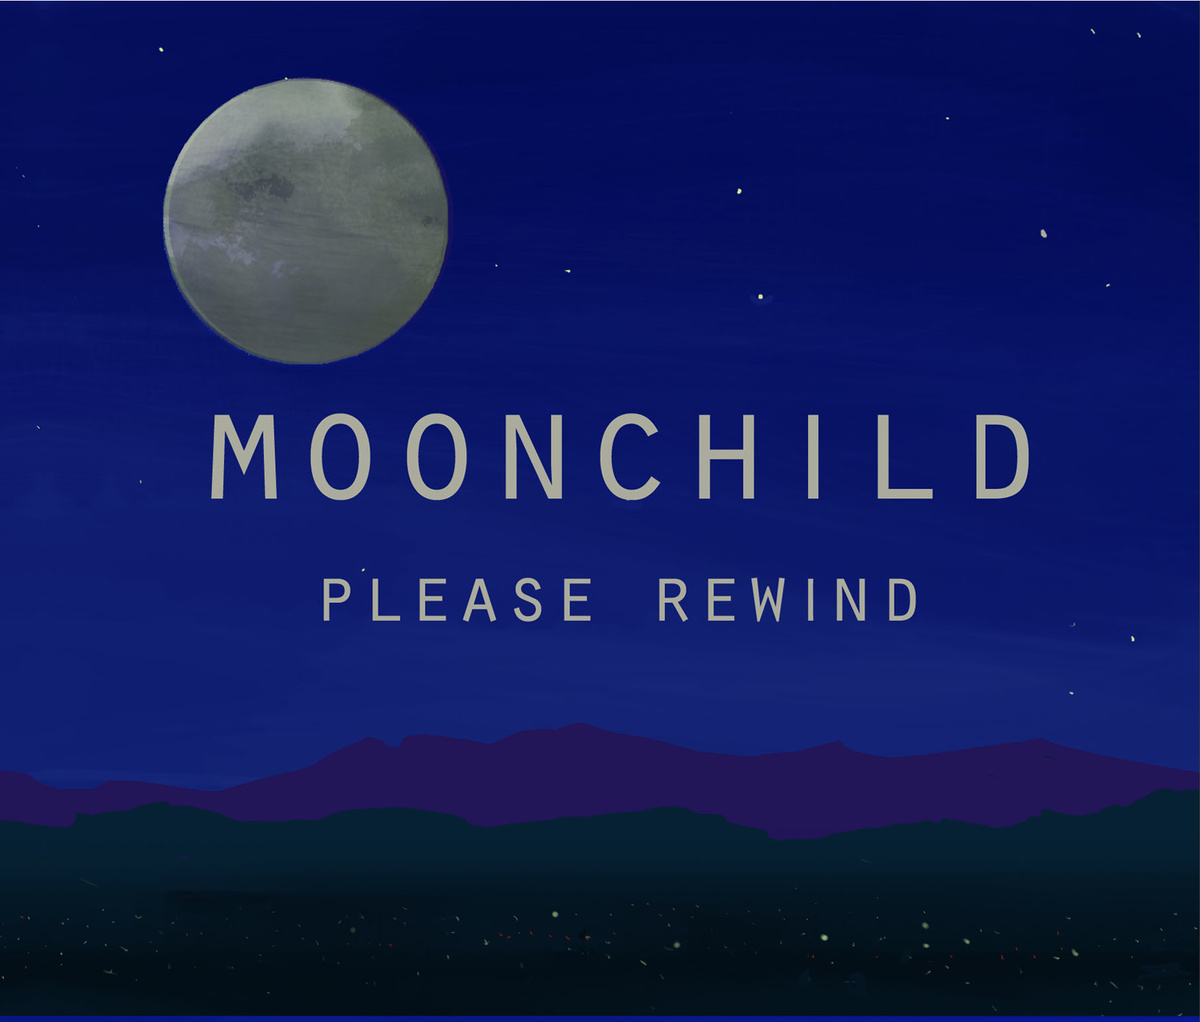 Moonchild - "Please Rewind" (Release)